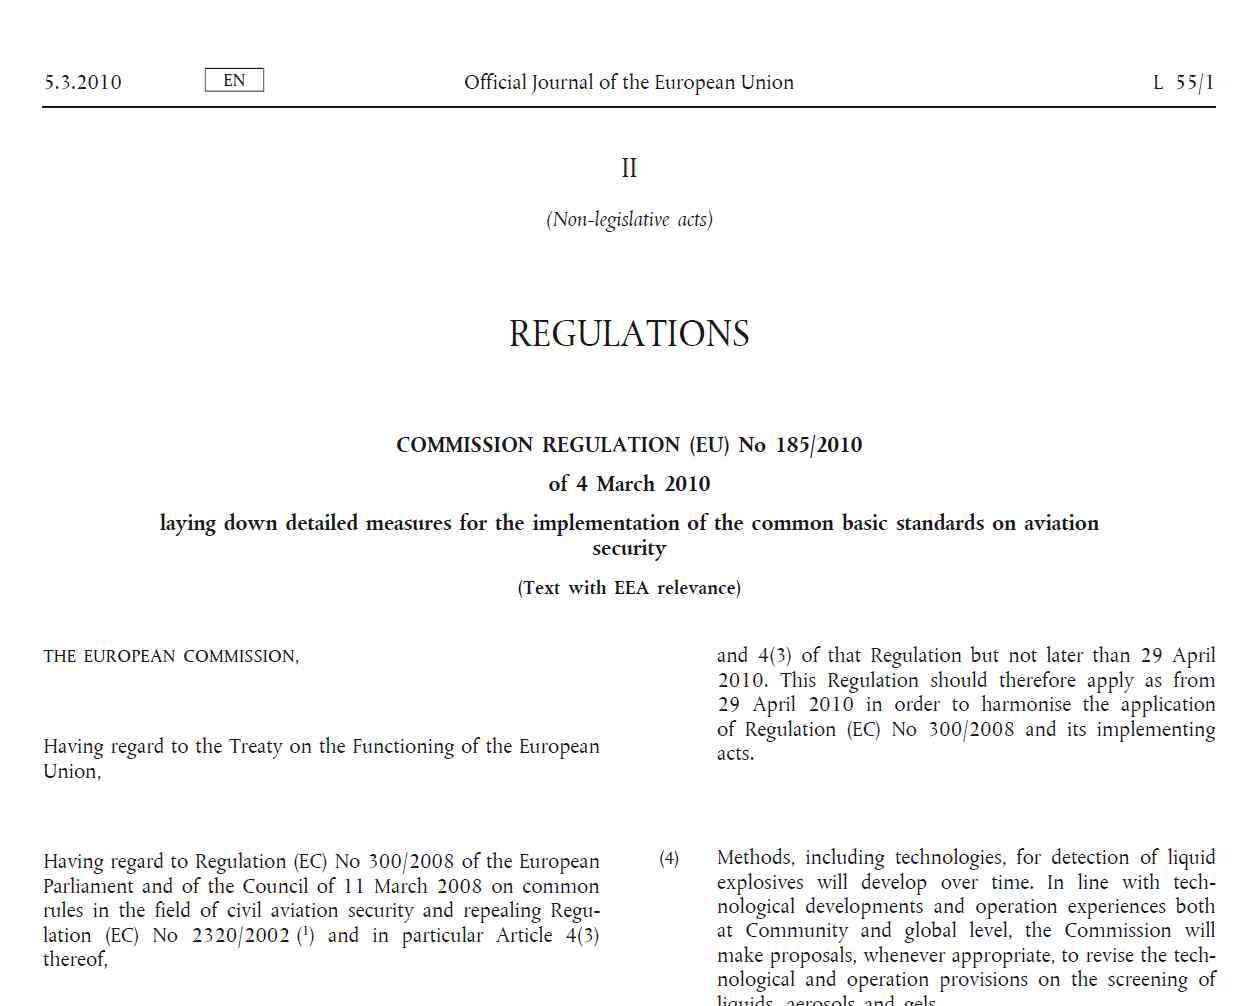 EU Regulation 185/2010